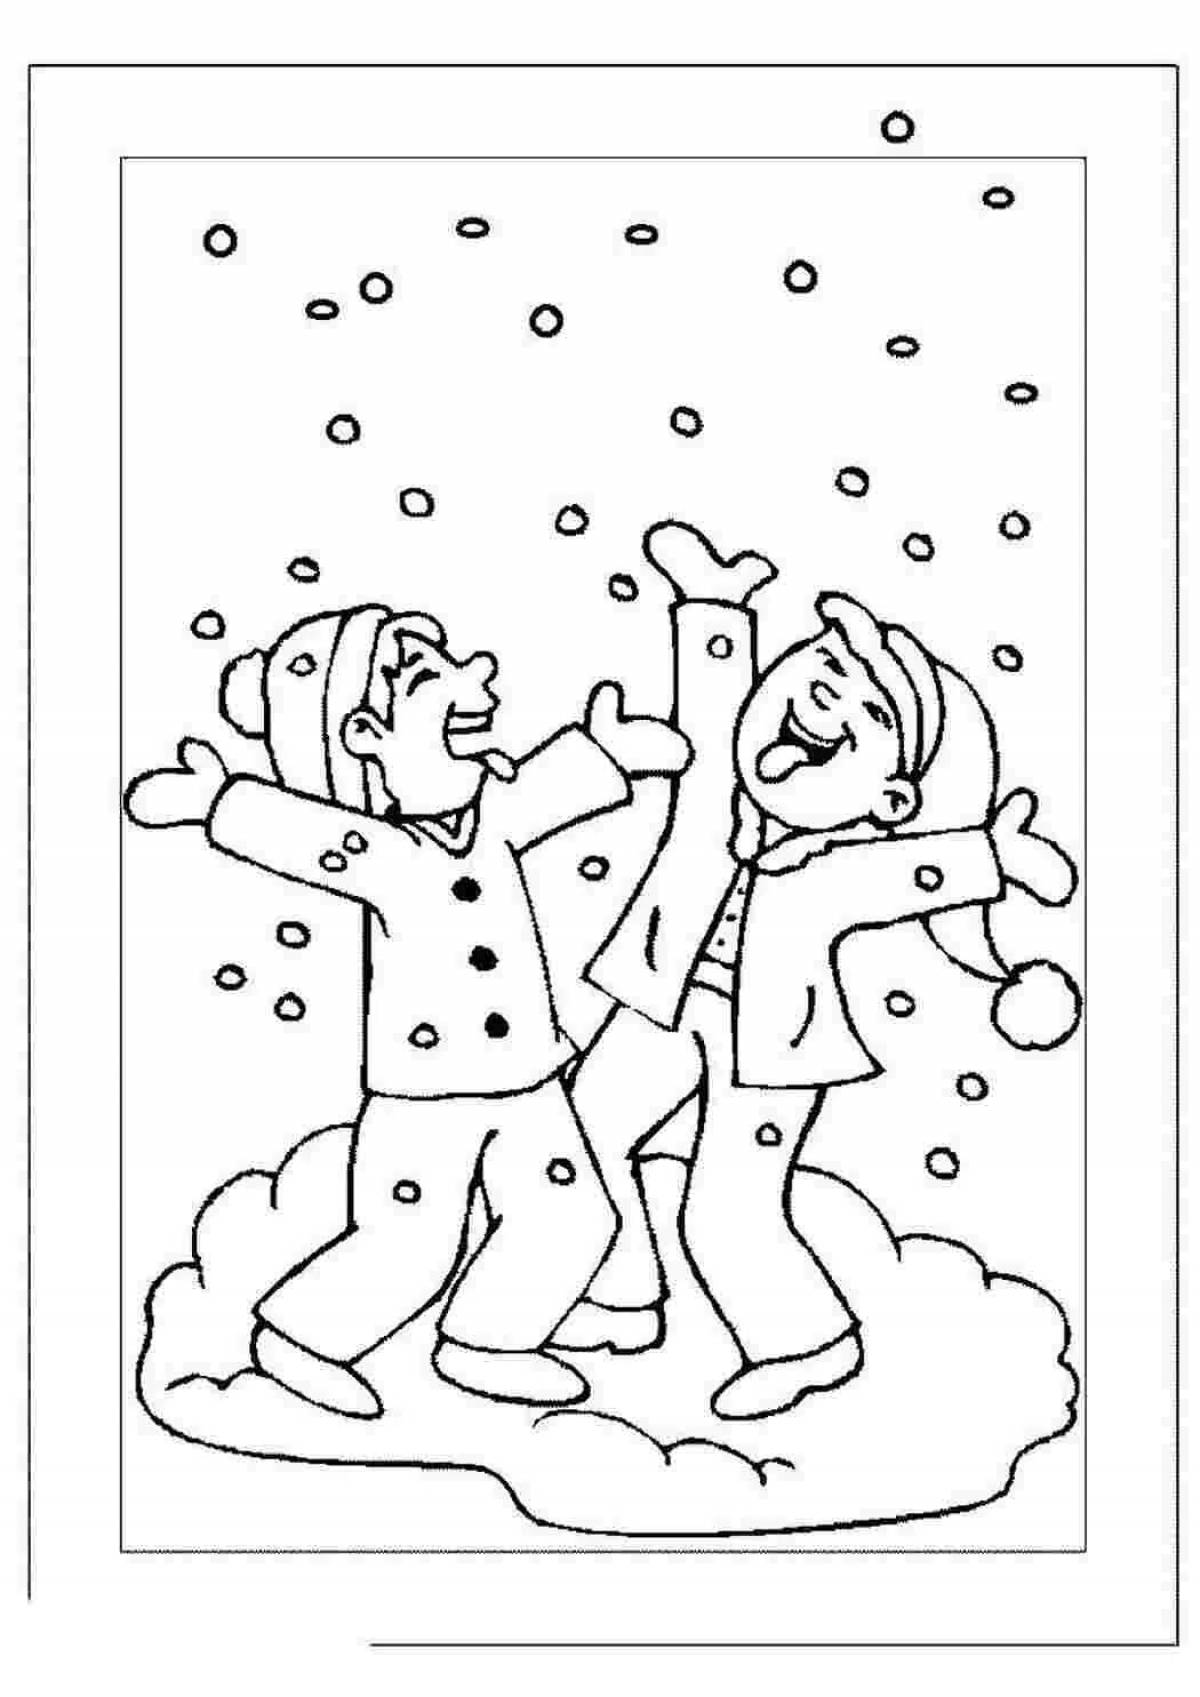 Wonderful snowfall coloring for kids